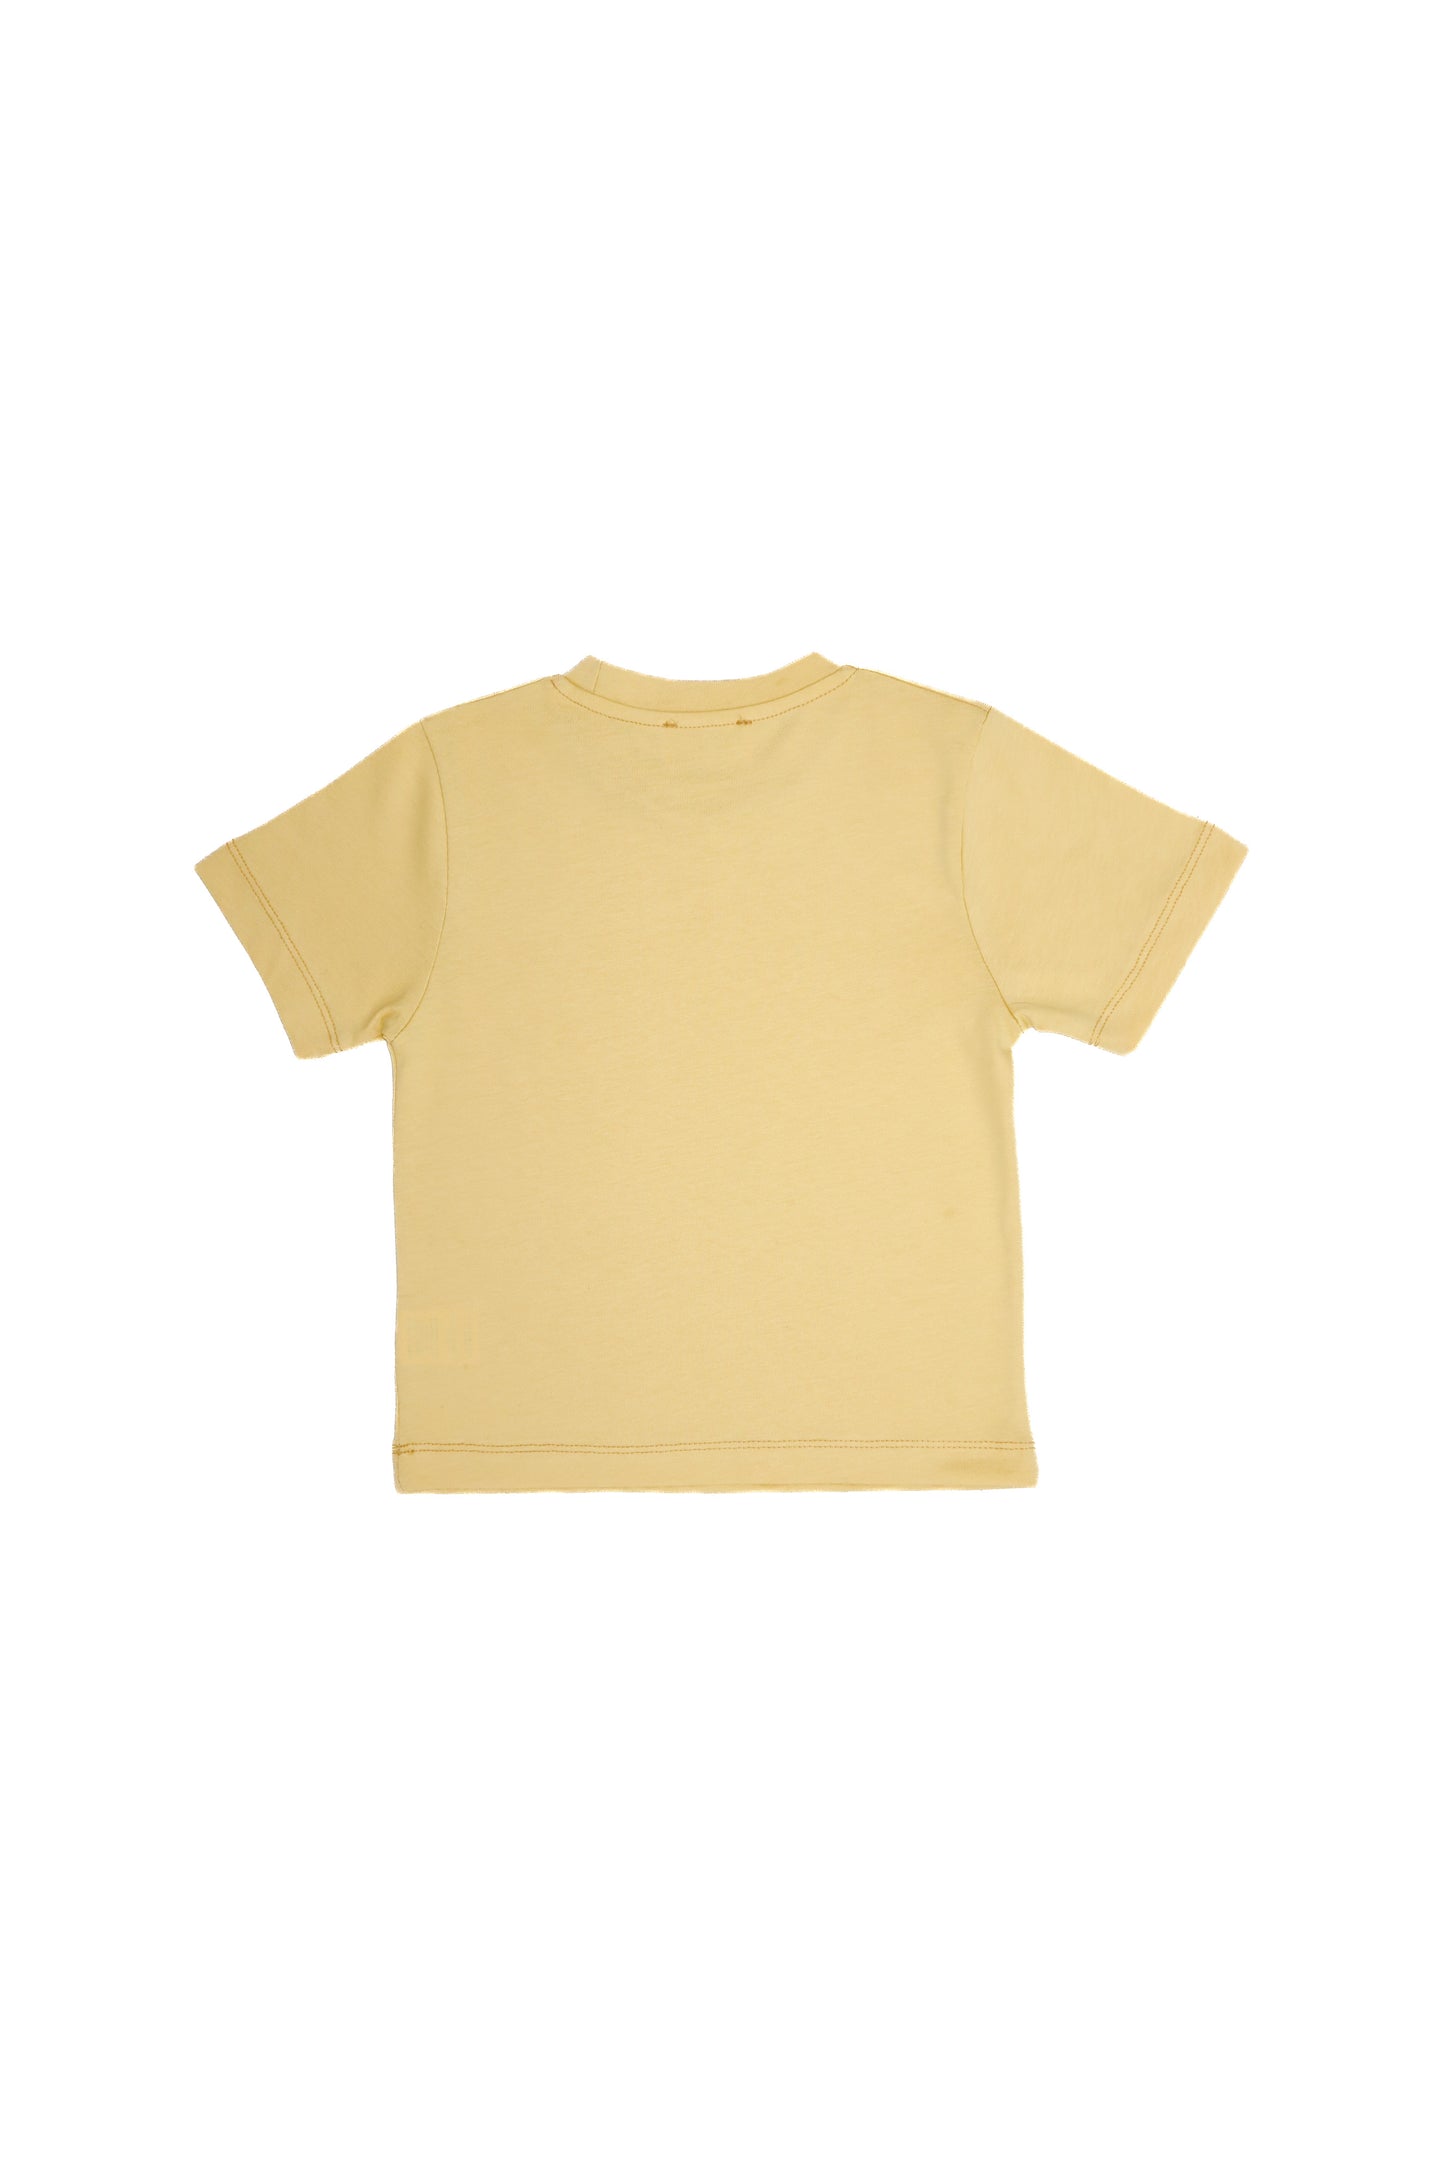 Children's Cotton T-Shirt